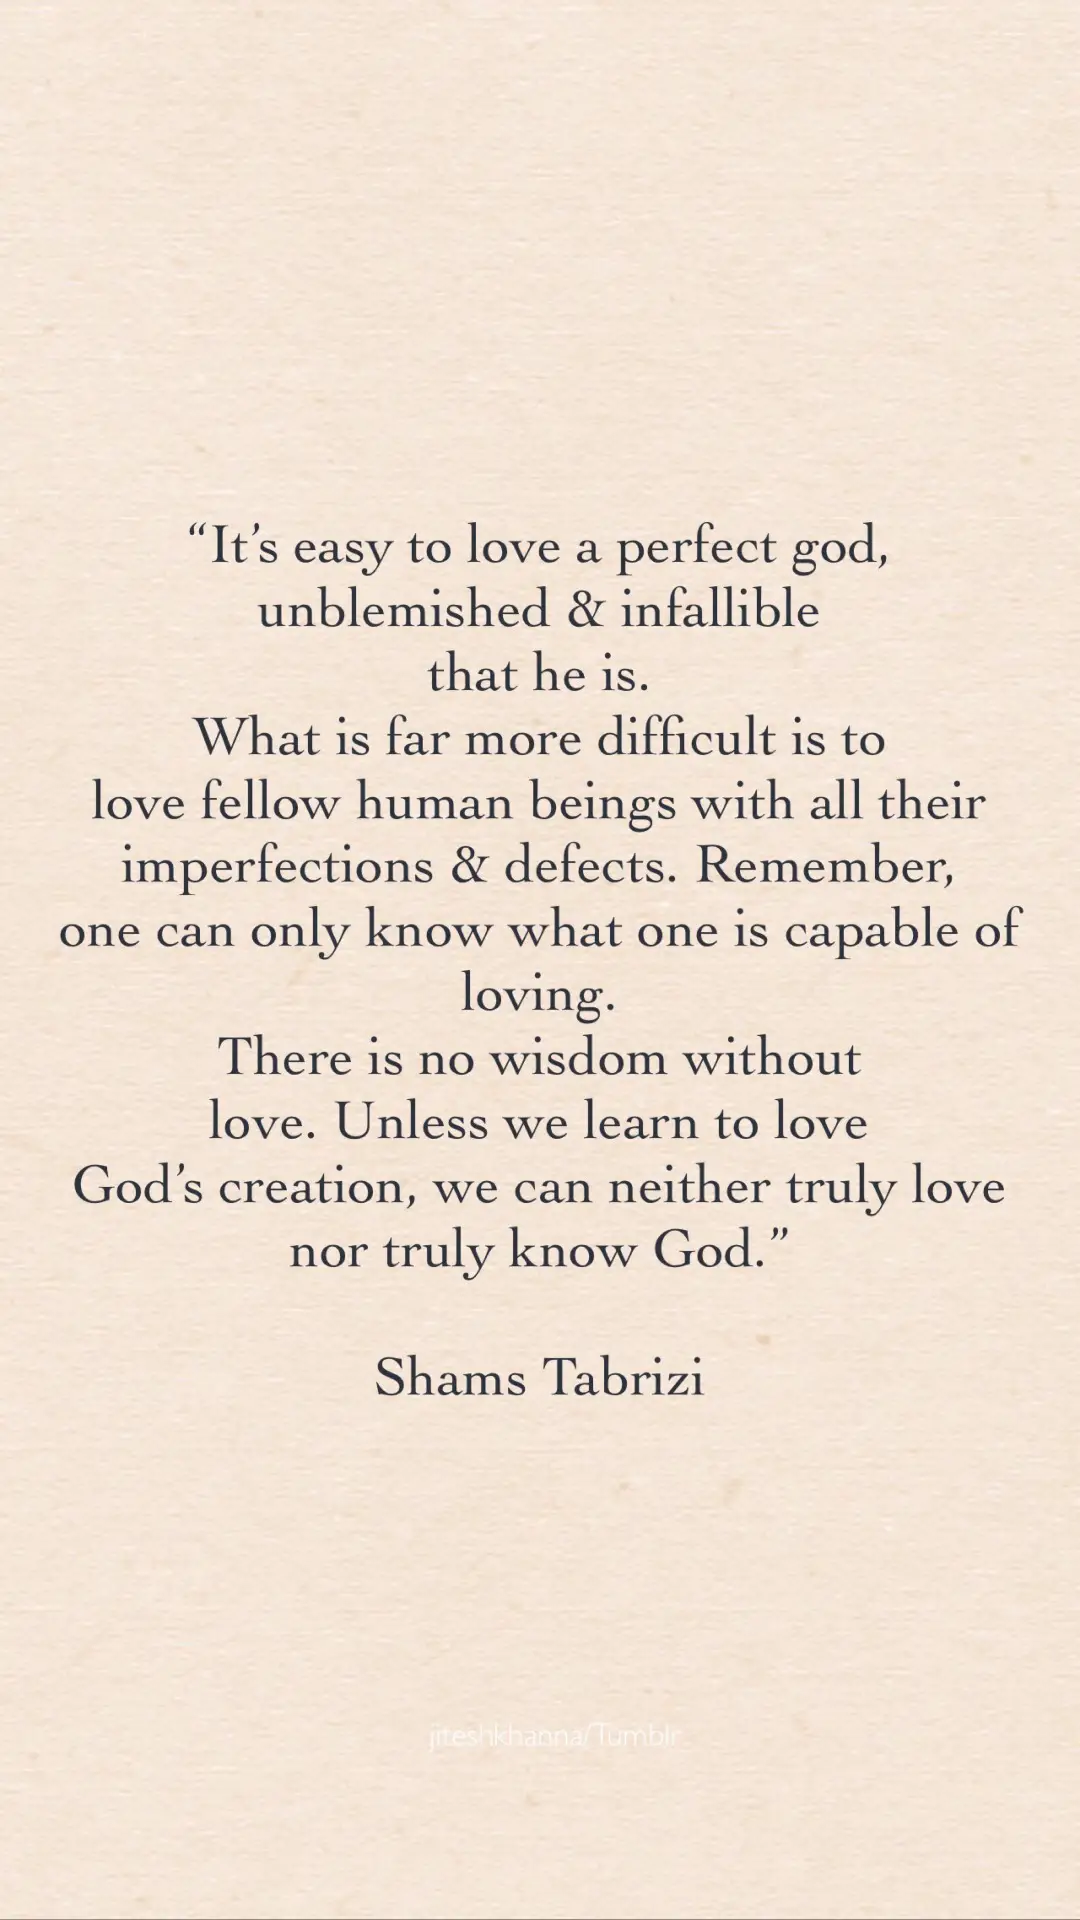 shams tabrizi on love